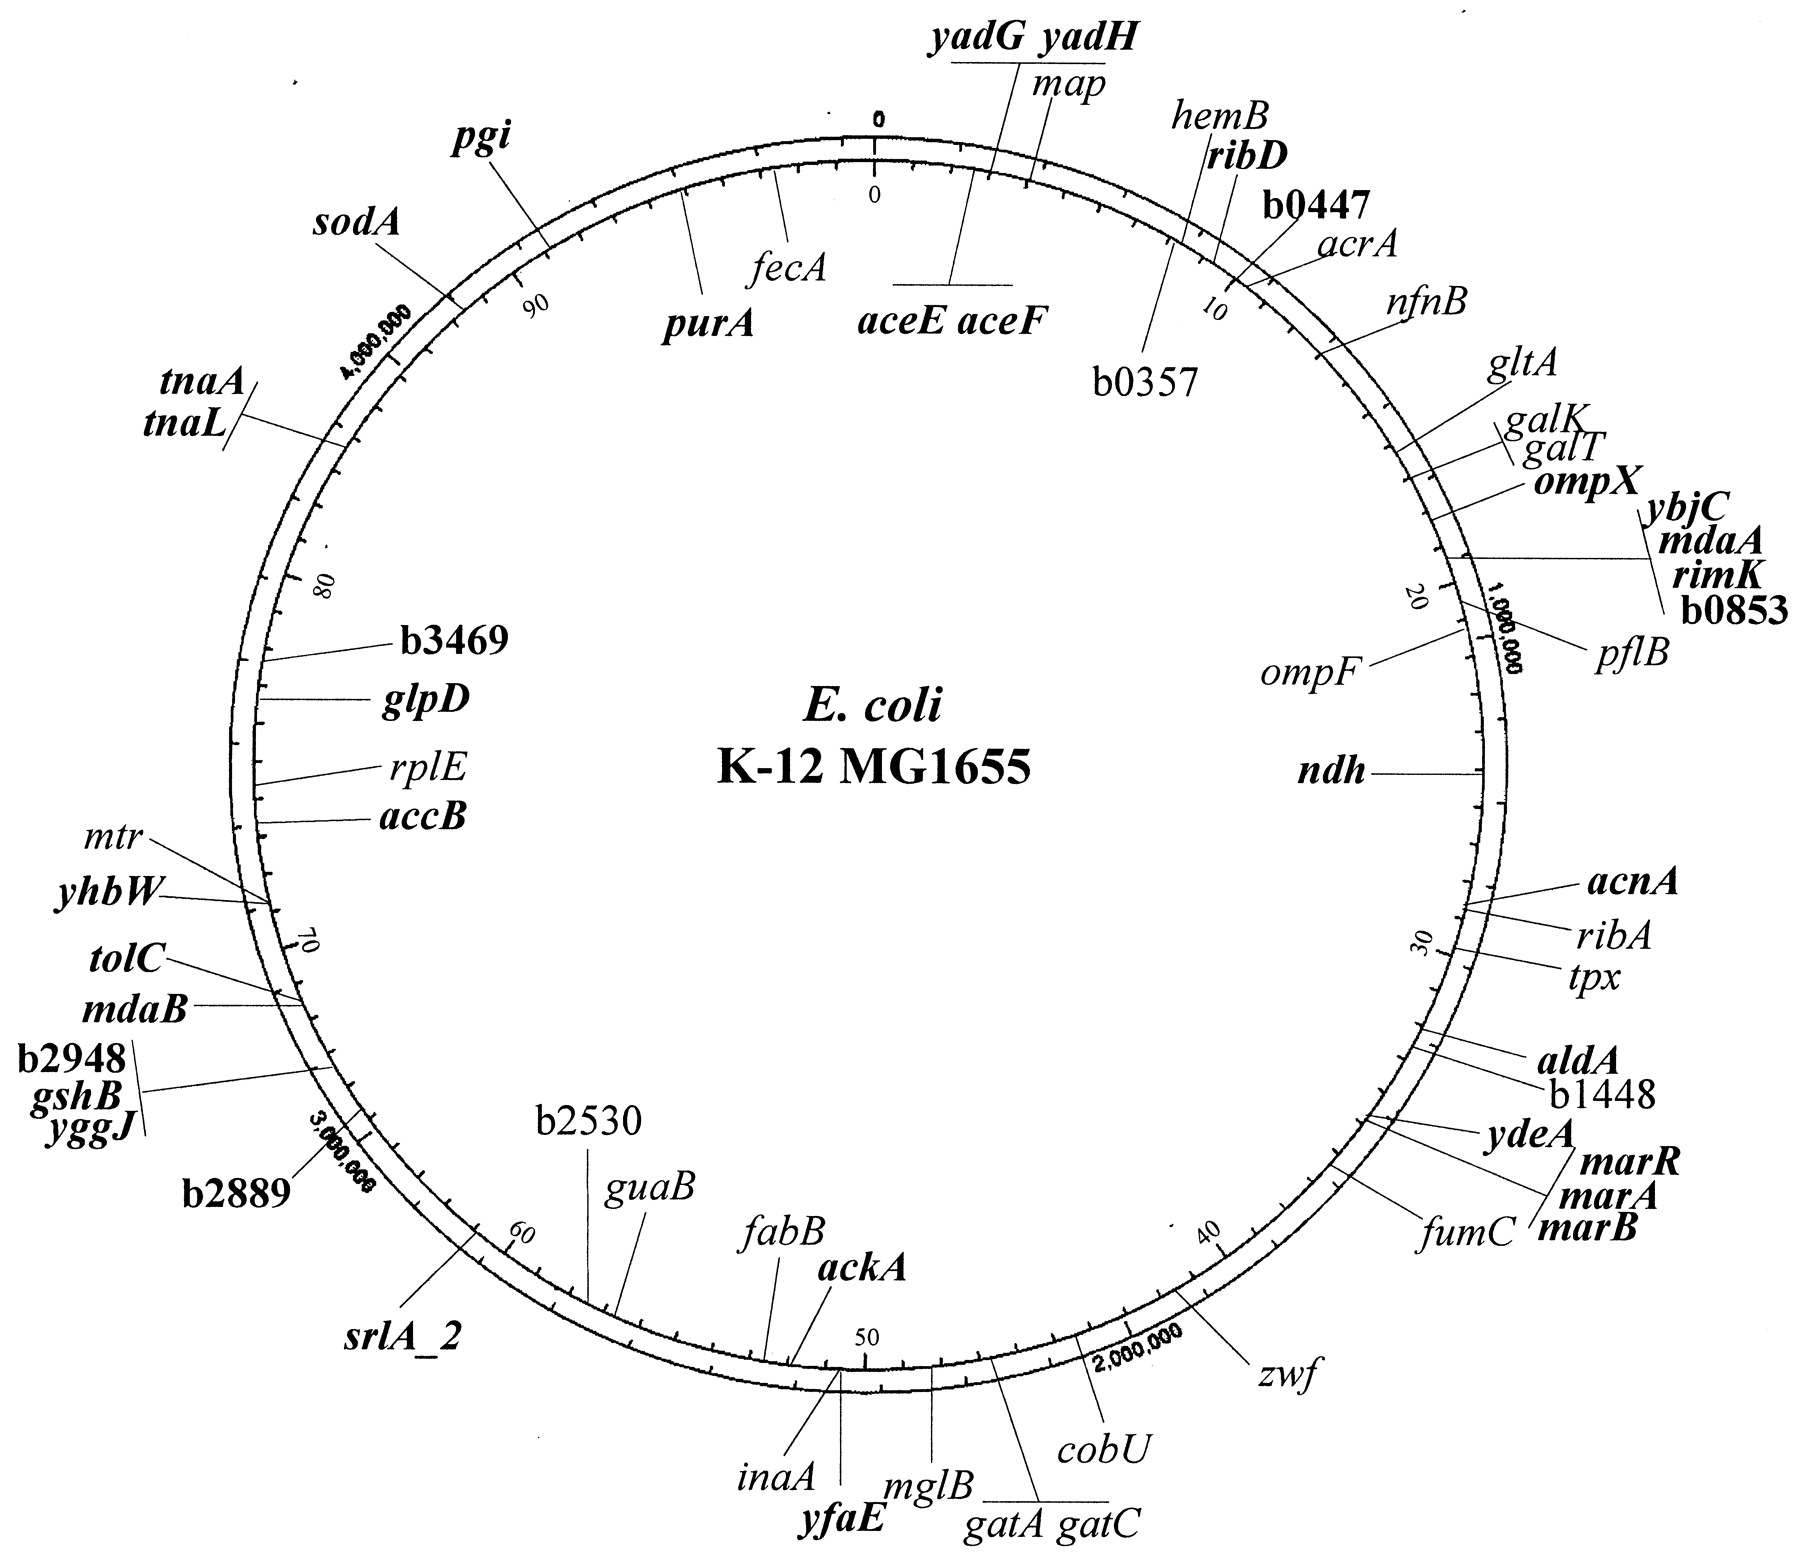 Circular chromosome map of E. coli strain K-12 MG1655.